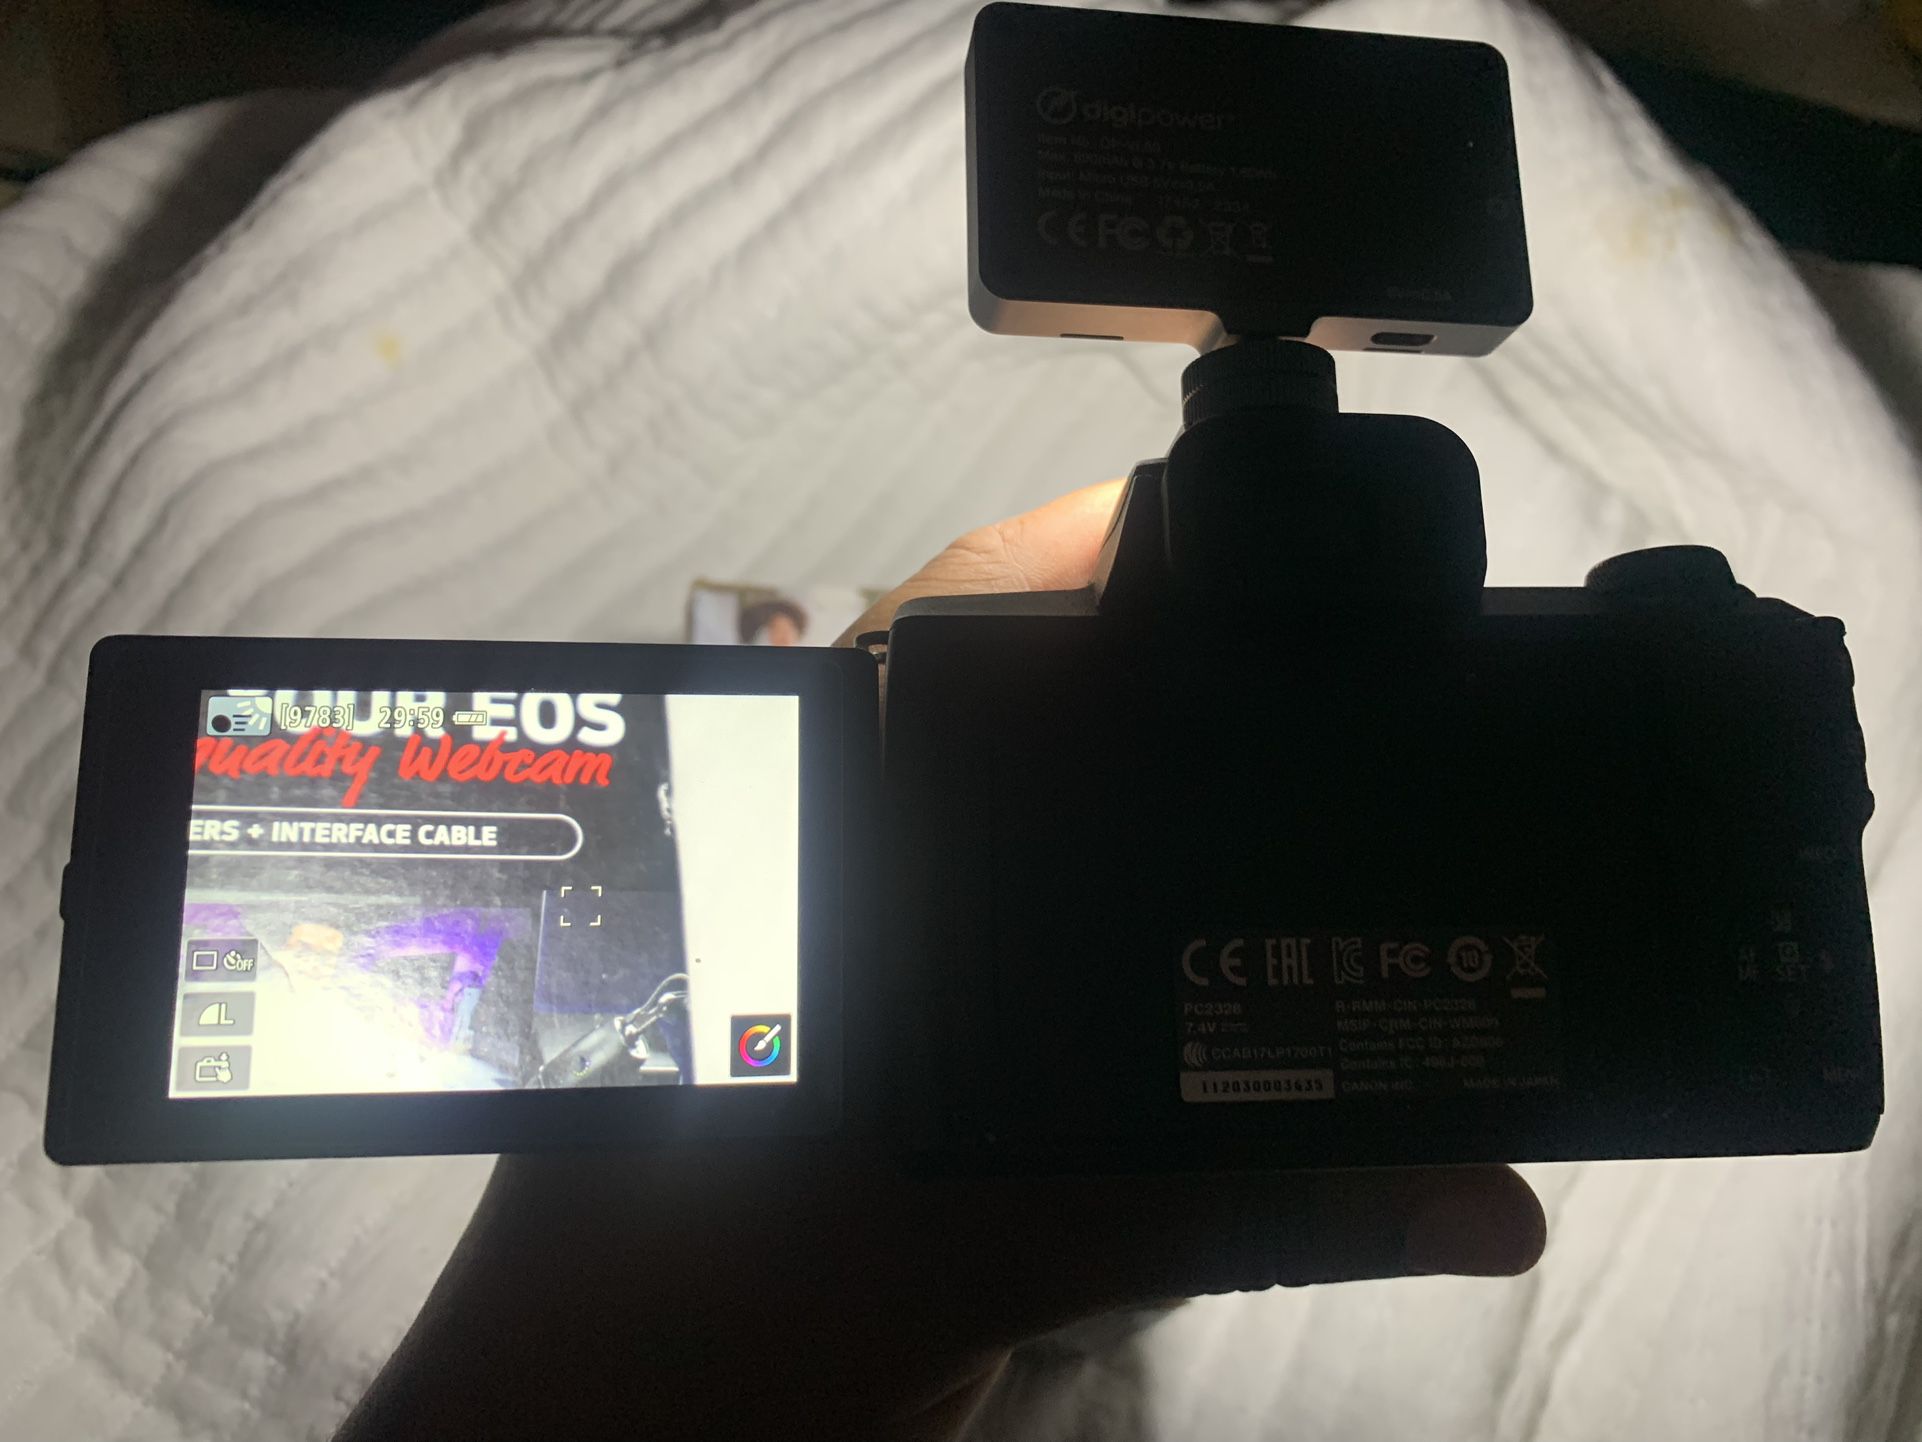 Canon Eos M50 2 With Webcam Eos For Videos Calls